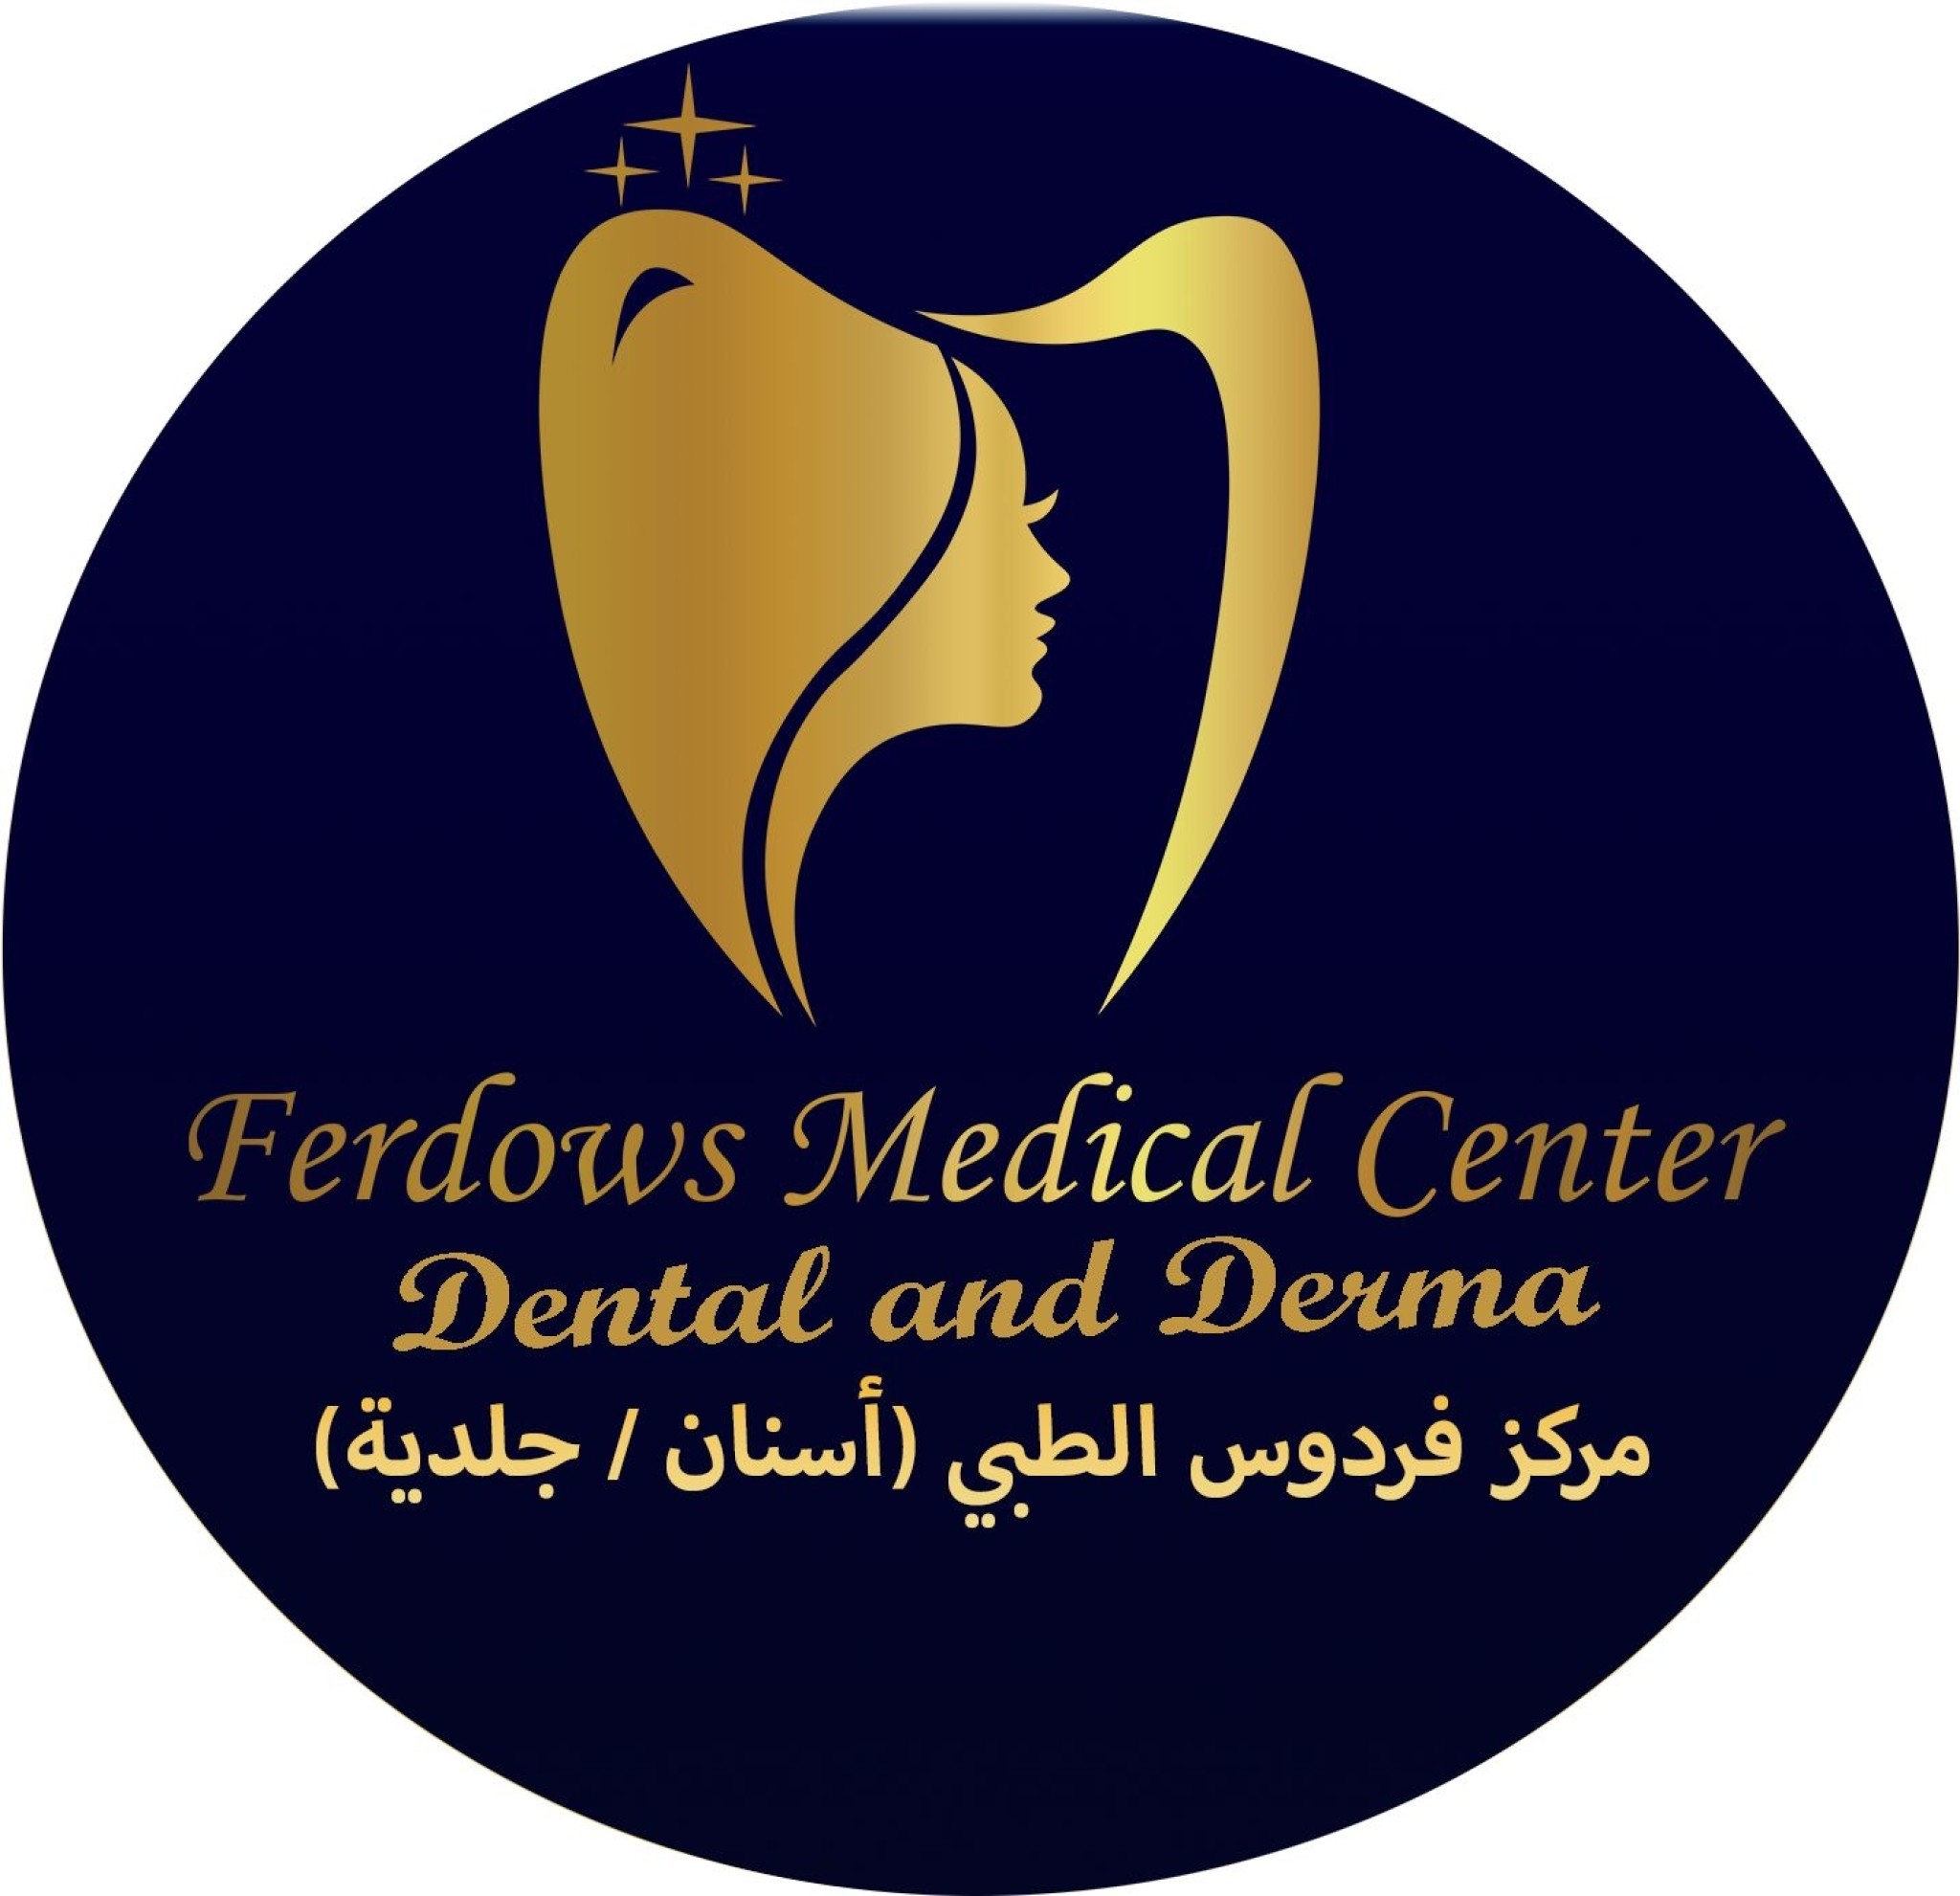 Ferdows Medical Center